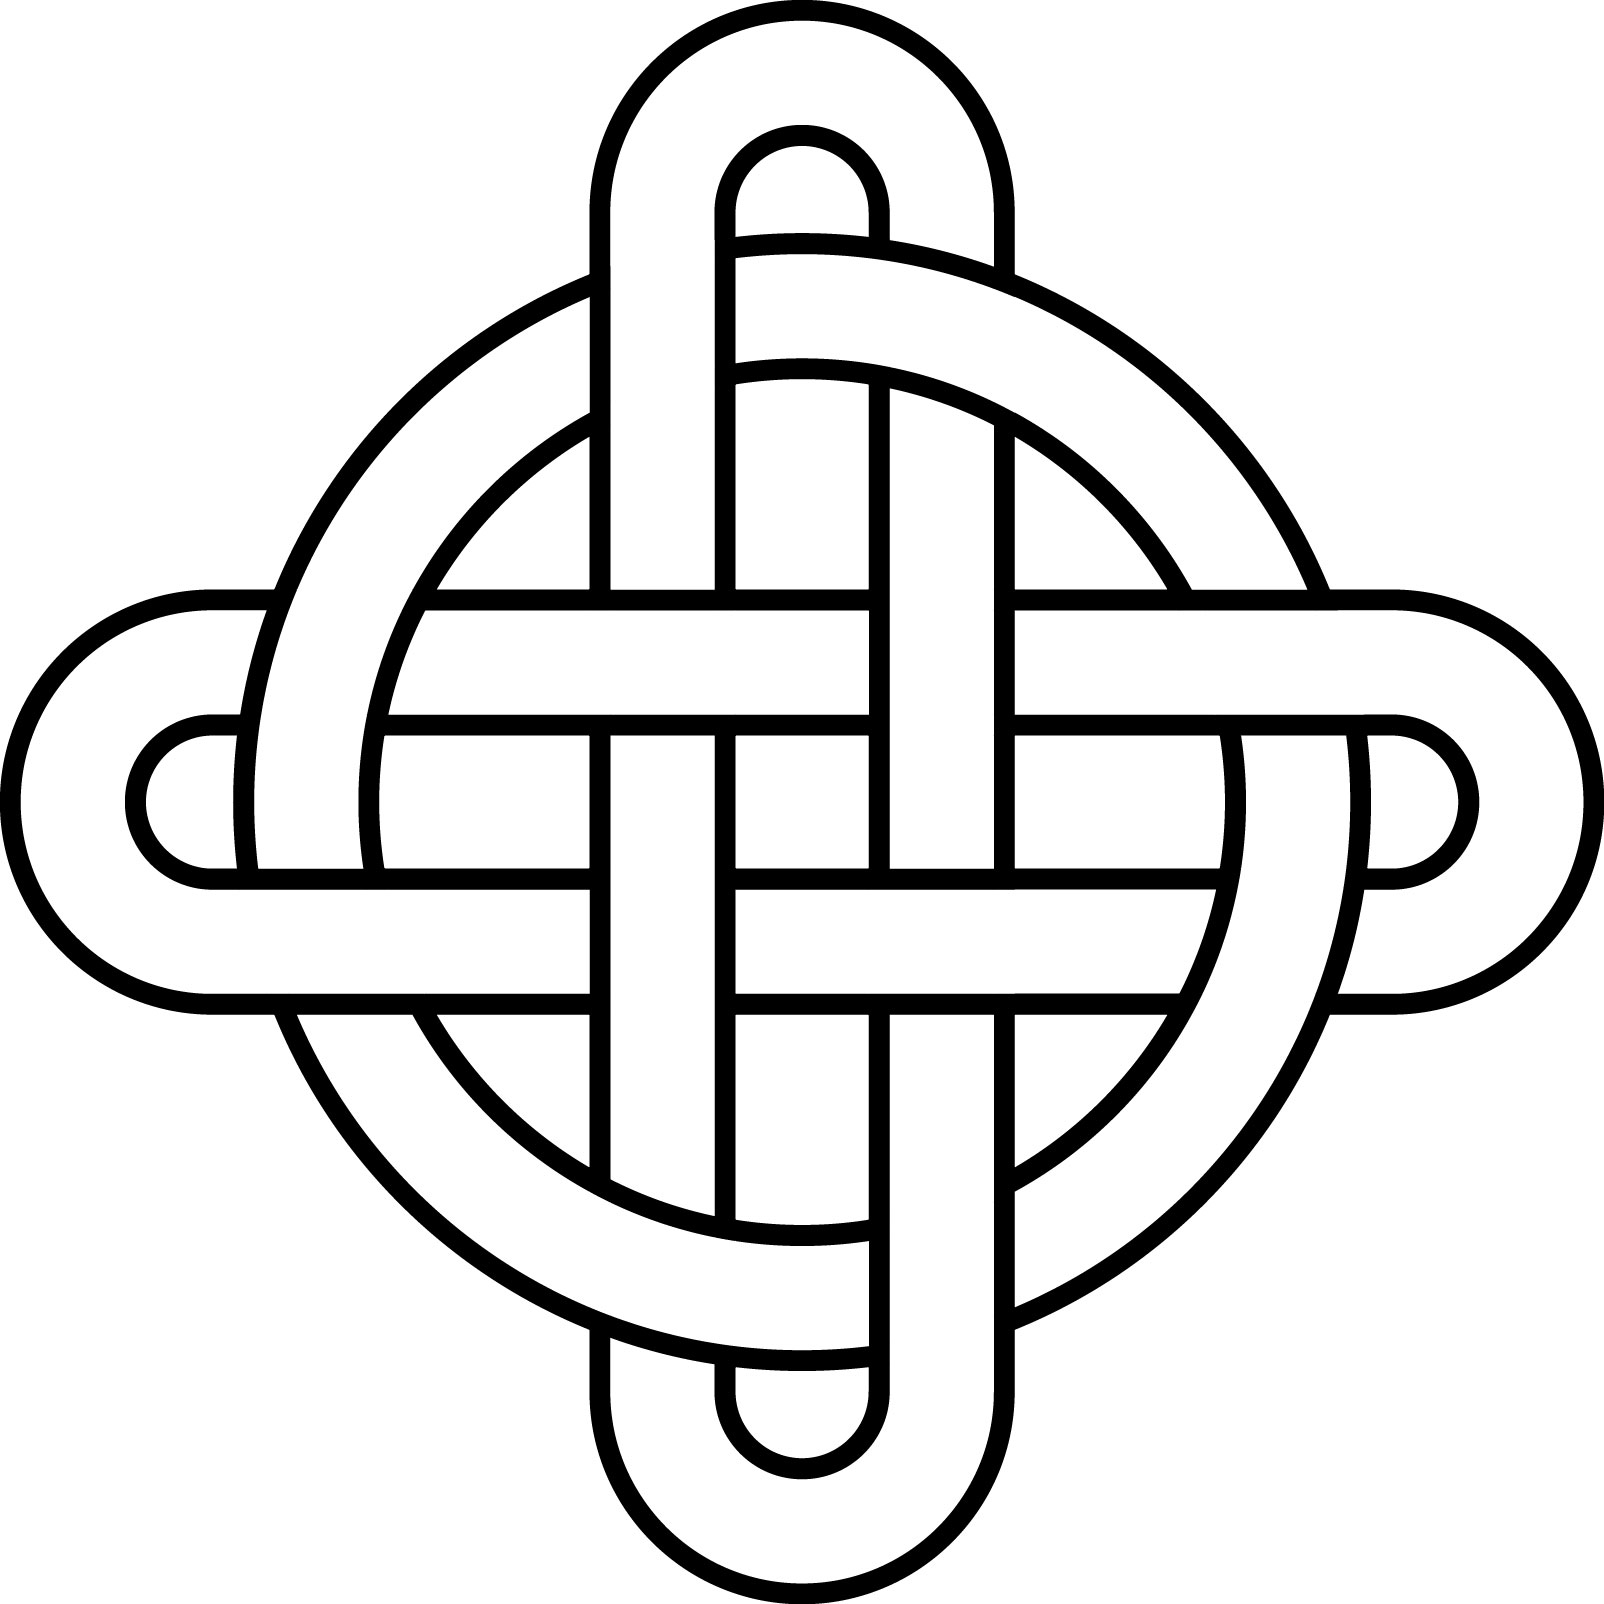 printable-celtic-knot-patterns-printable-world-holiday